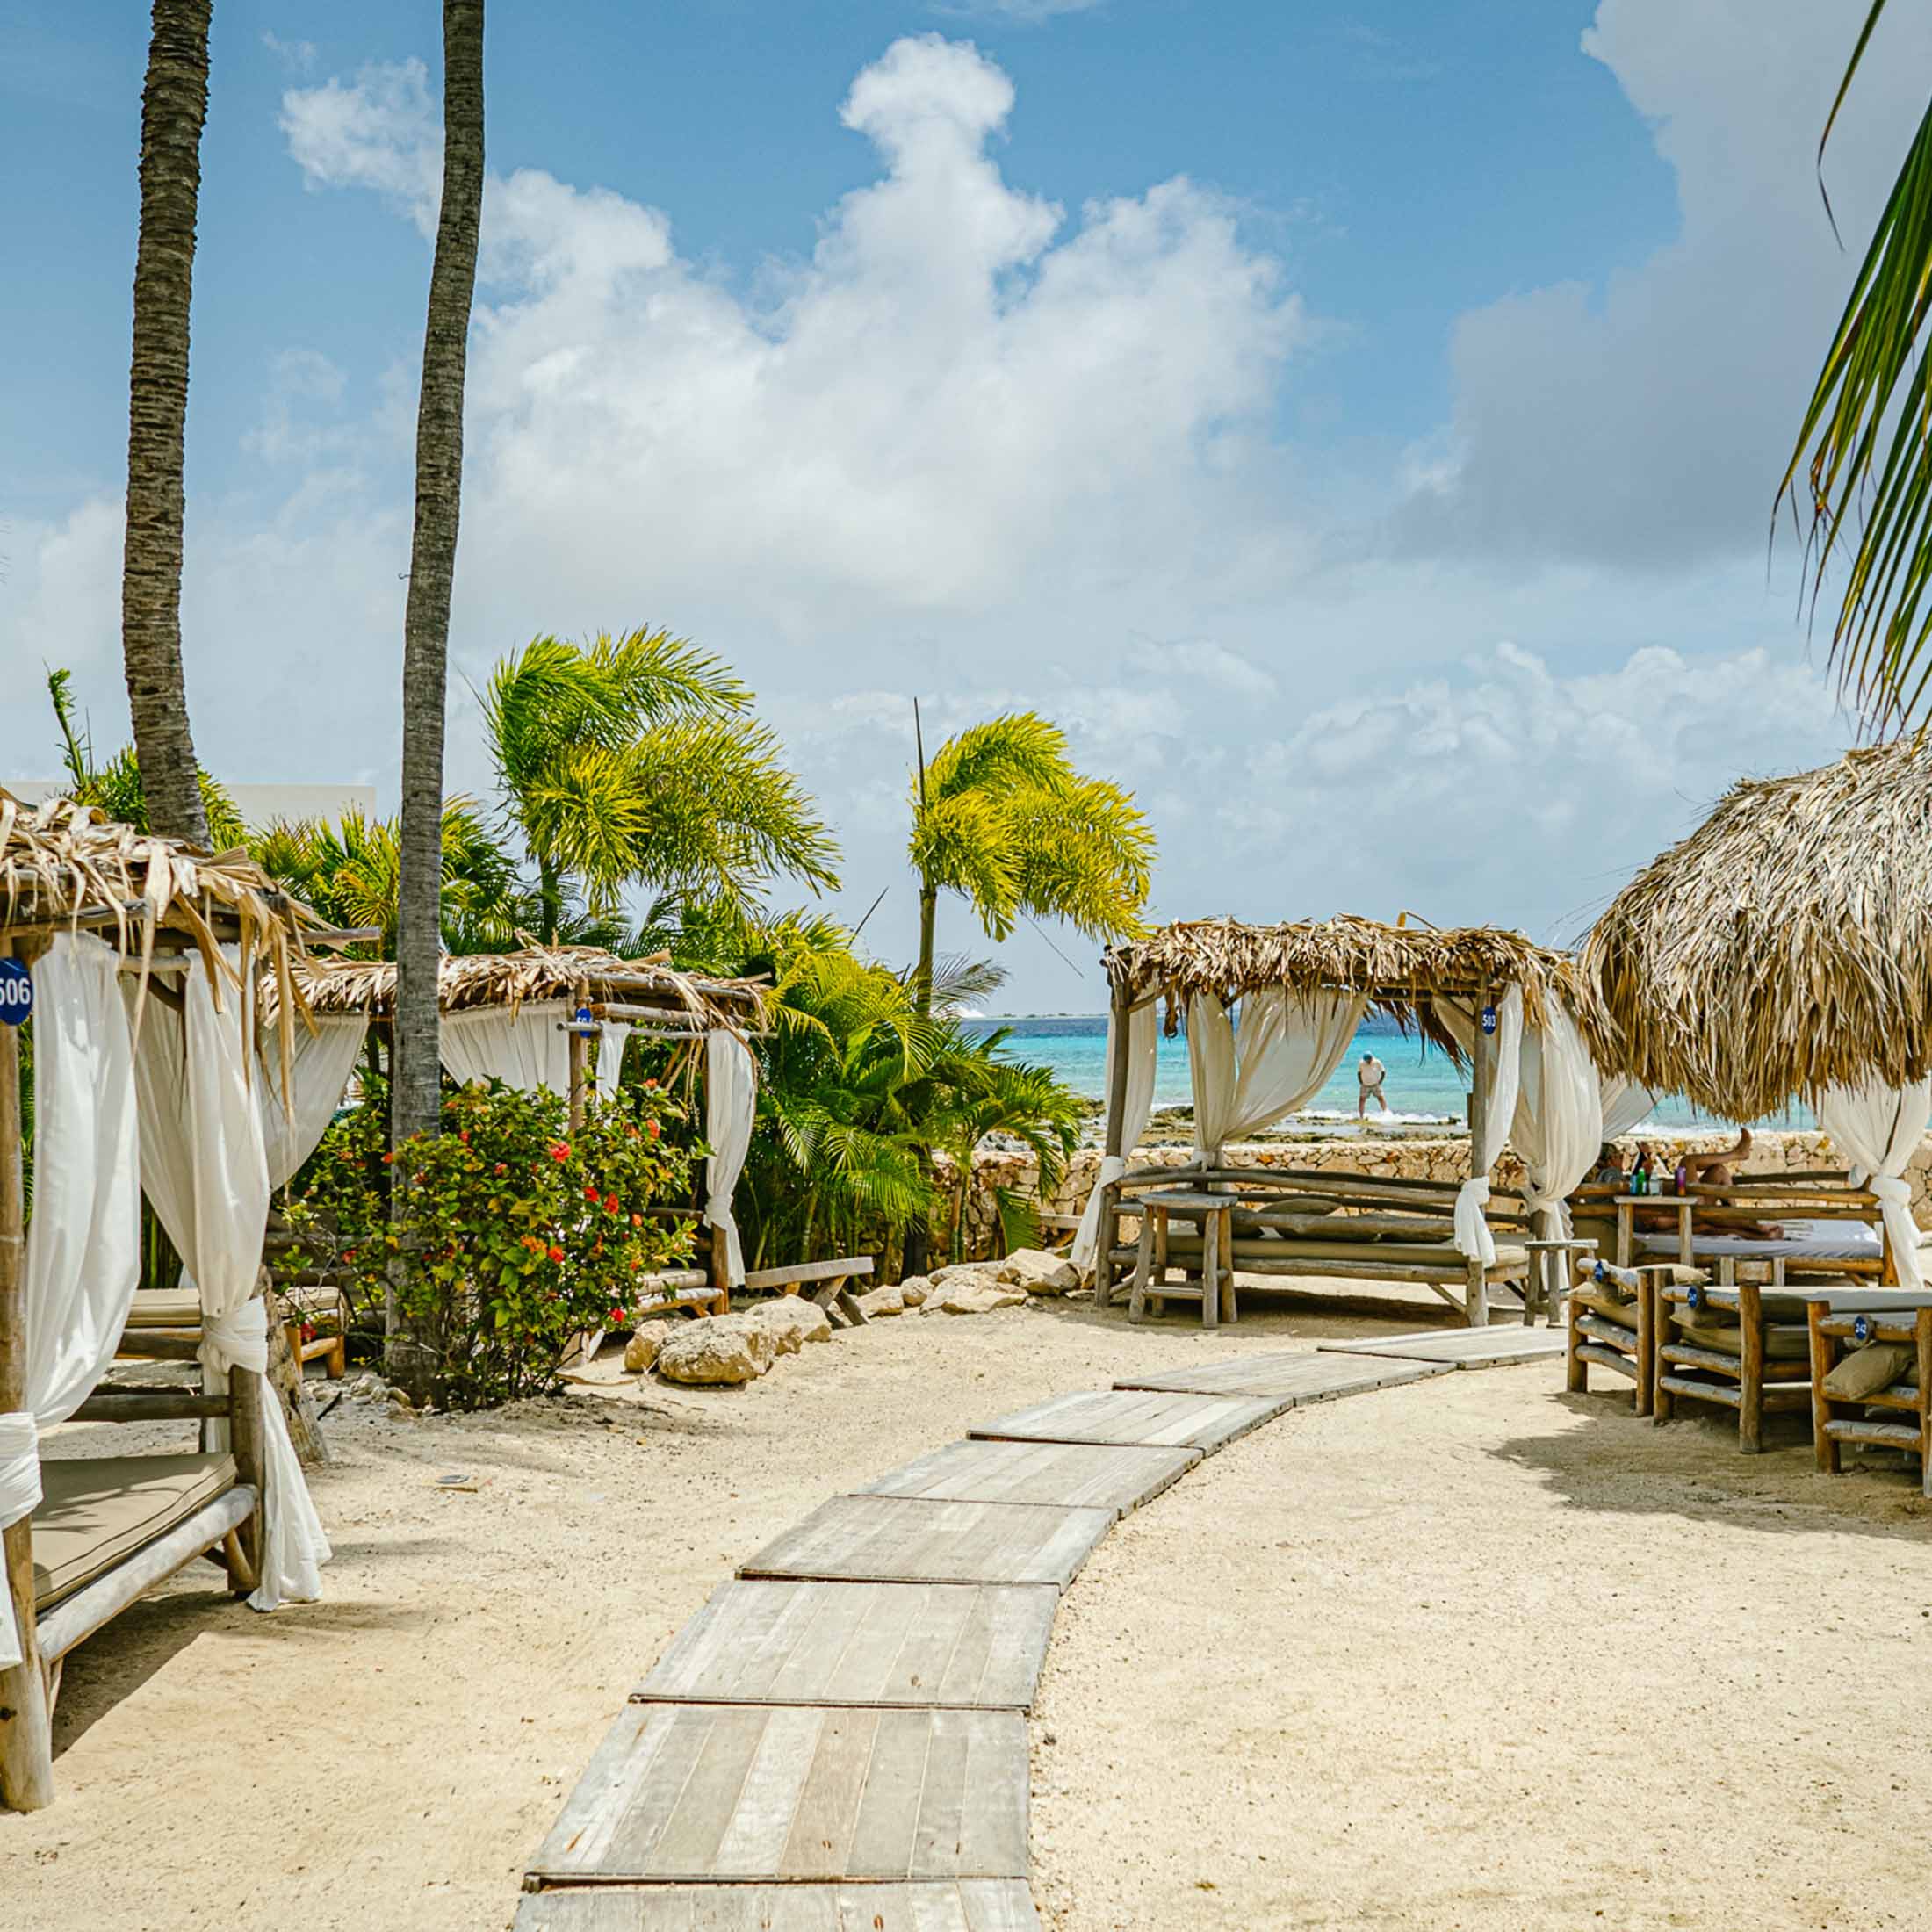 Hotel cabanas alongside beach